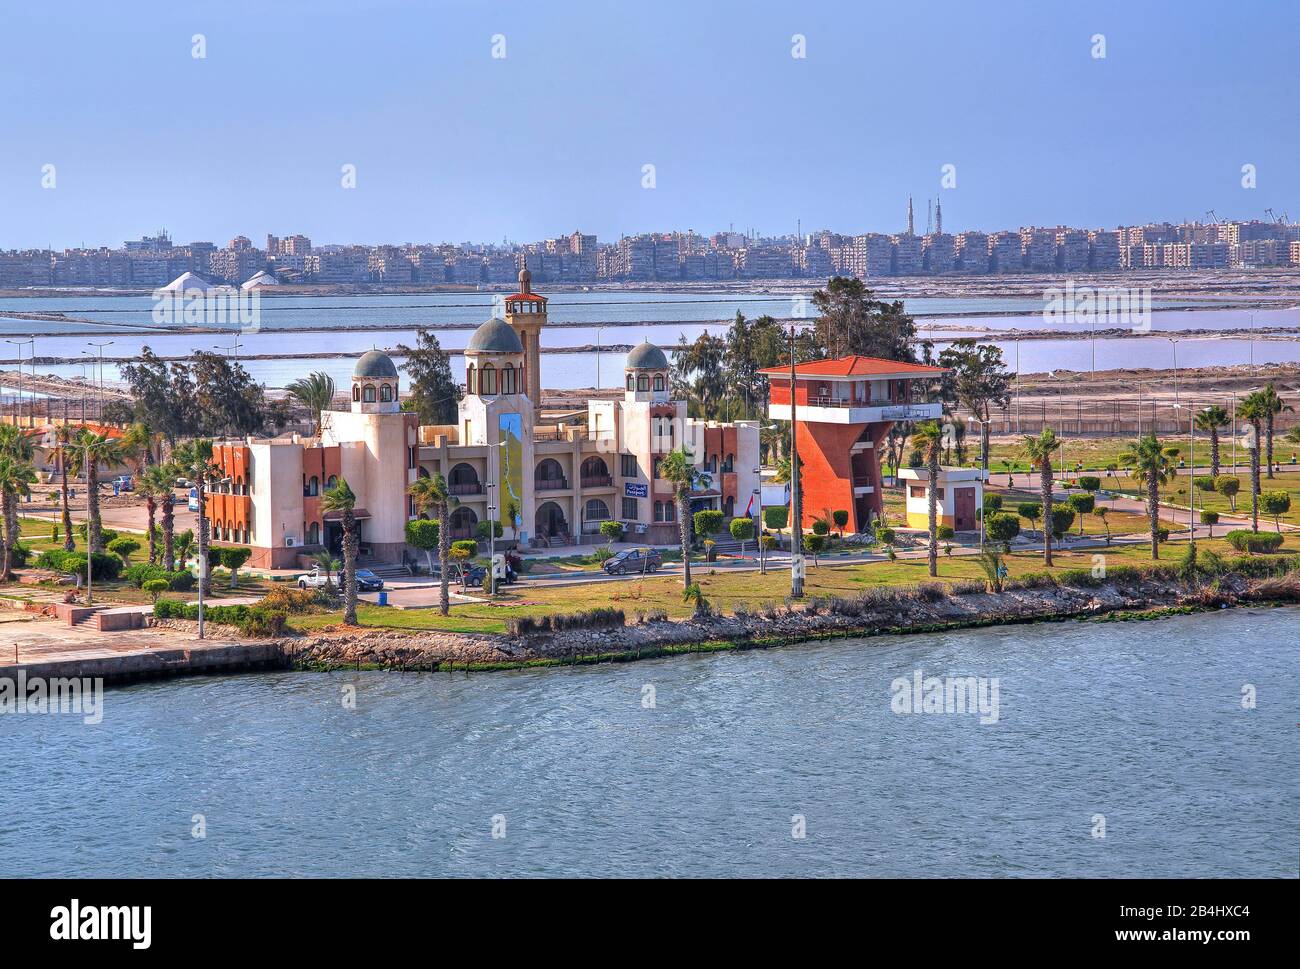 Pilotstation der Kanalpiloten am Suez-Kanal (Suez-Kanal) in Port Said Mediterranean Sea, Ägypten Stockfoto